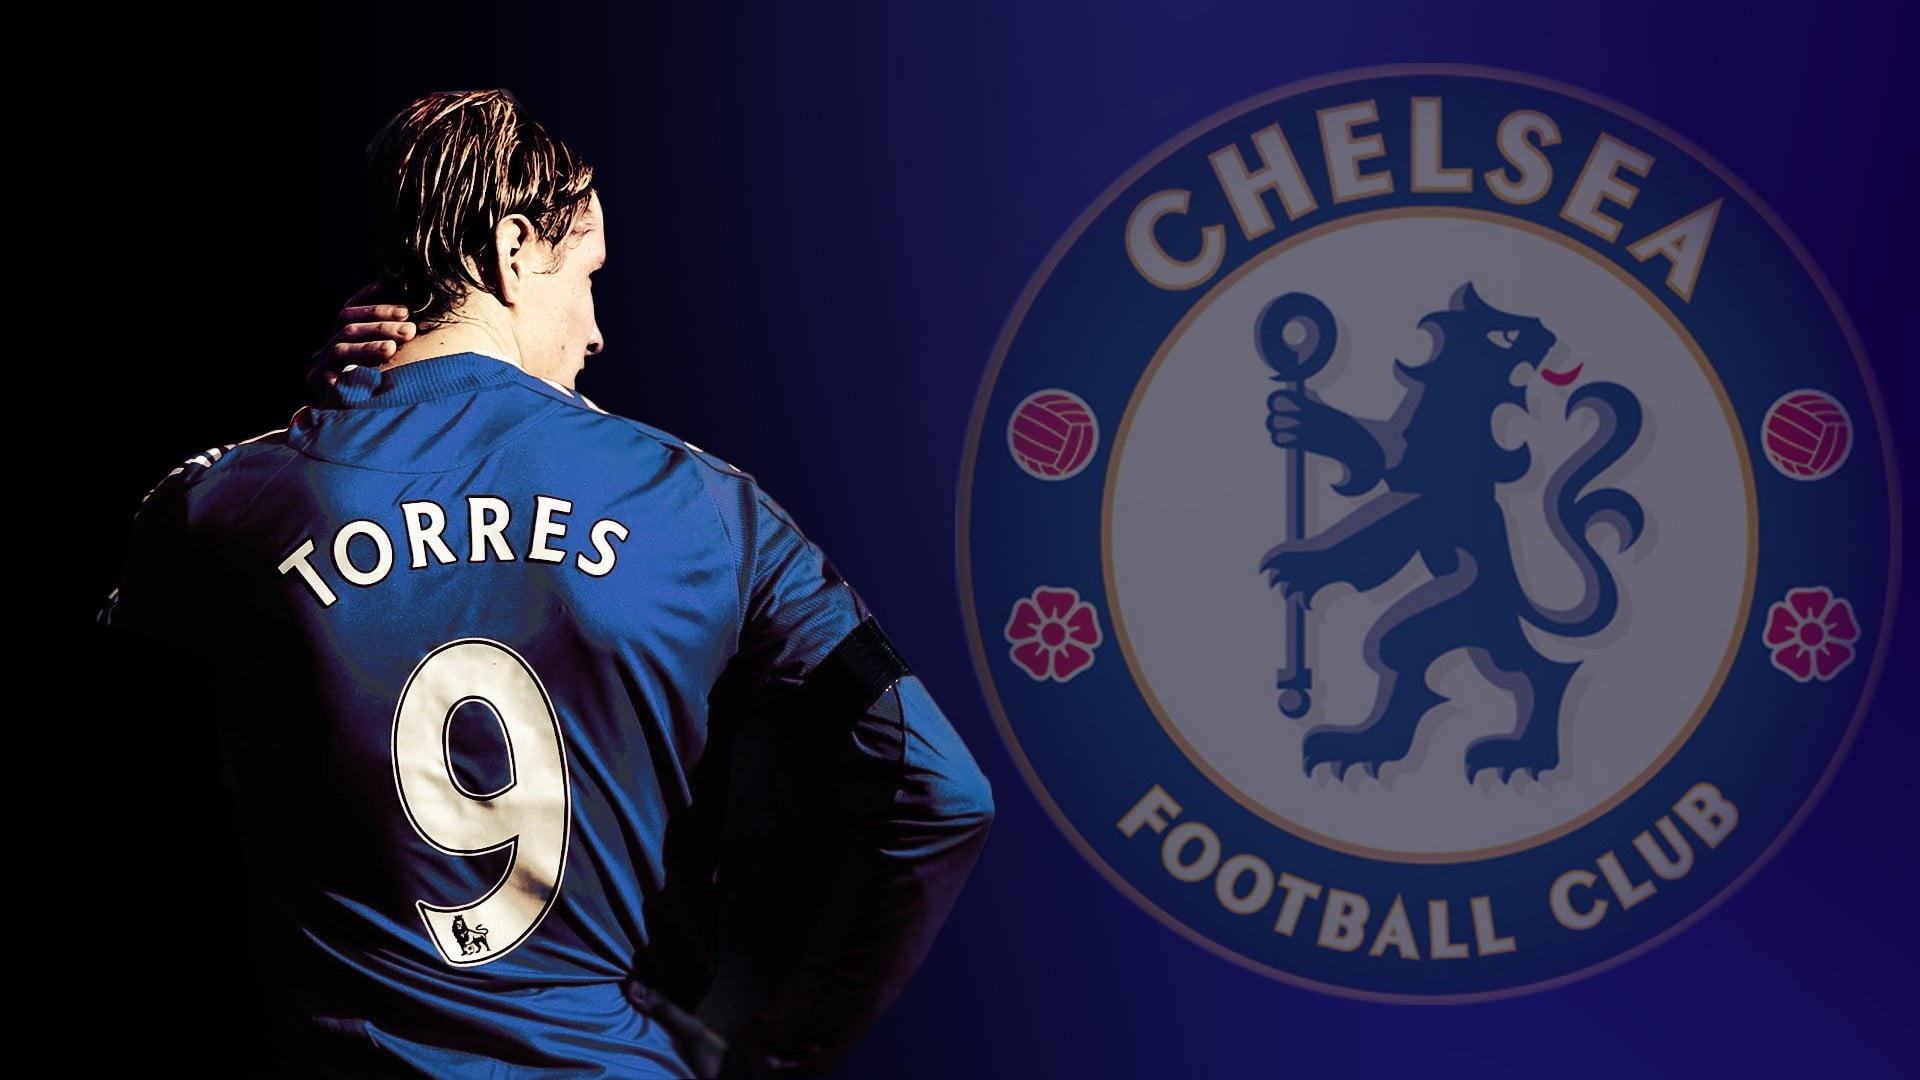 Chelsea football club, Fernando Torres, Chelsea FC